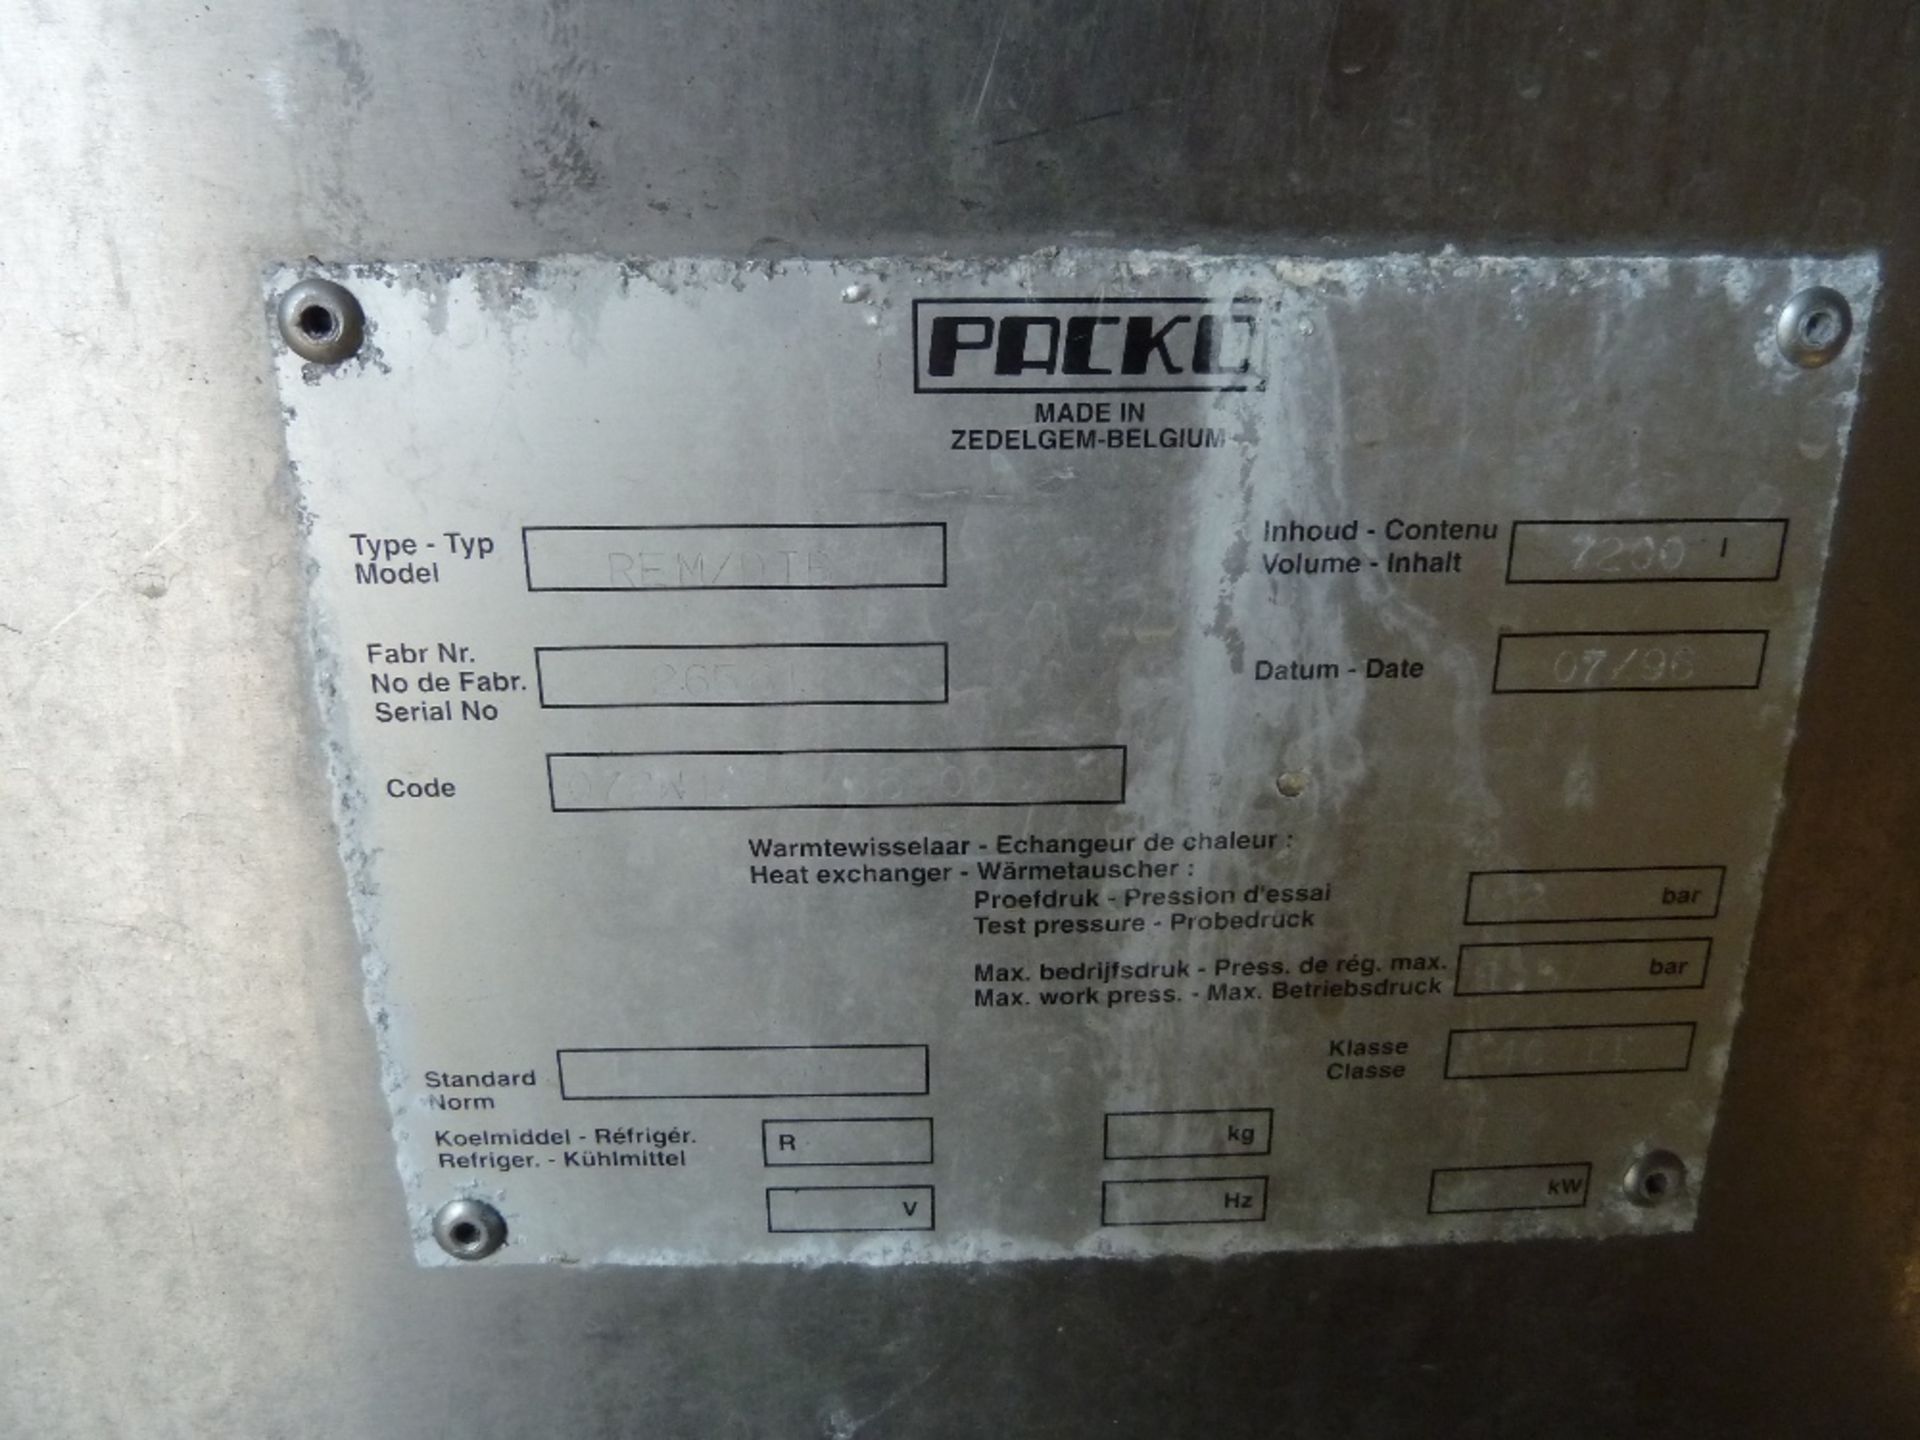 Fullwood bulk milk tank, 7,200L, serial 26561 with packomat control panel. - Image 5 of 5